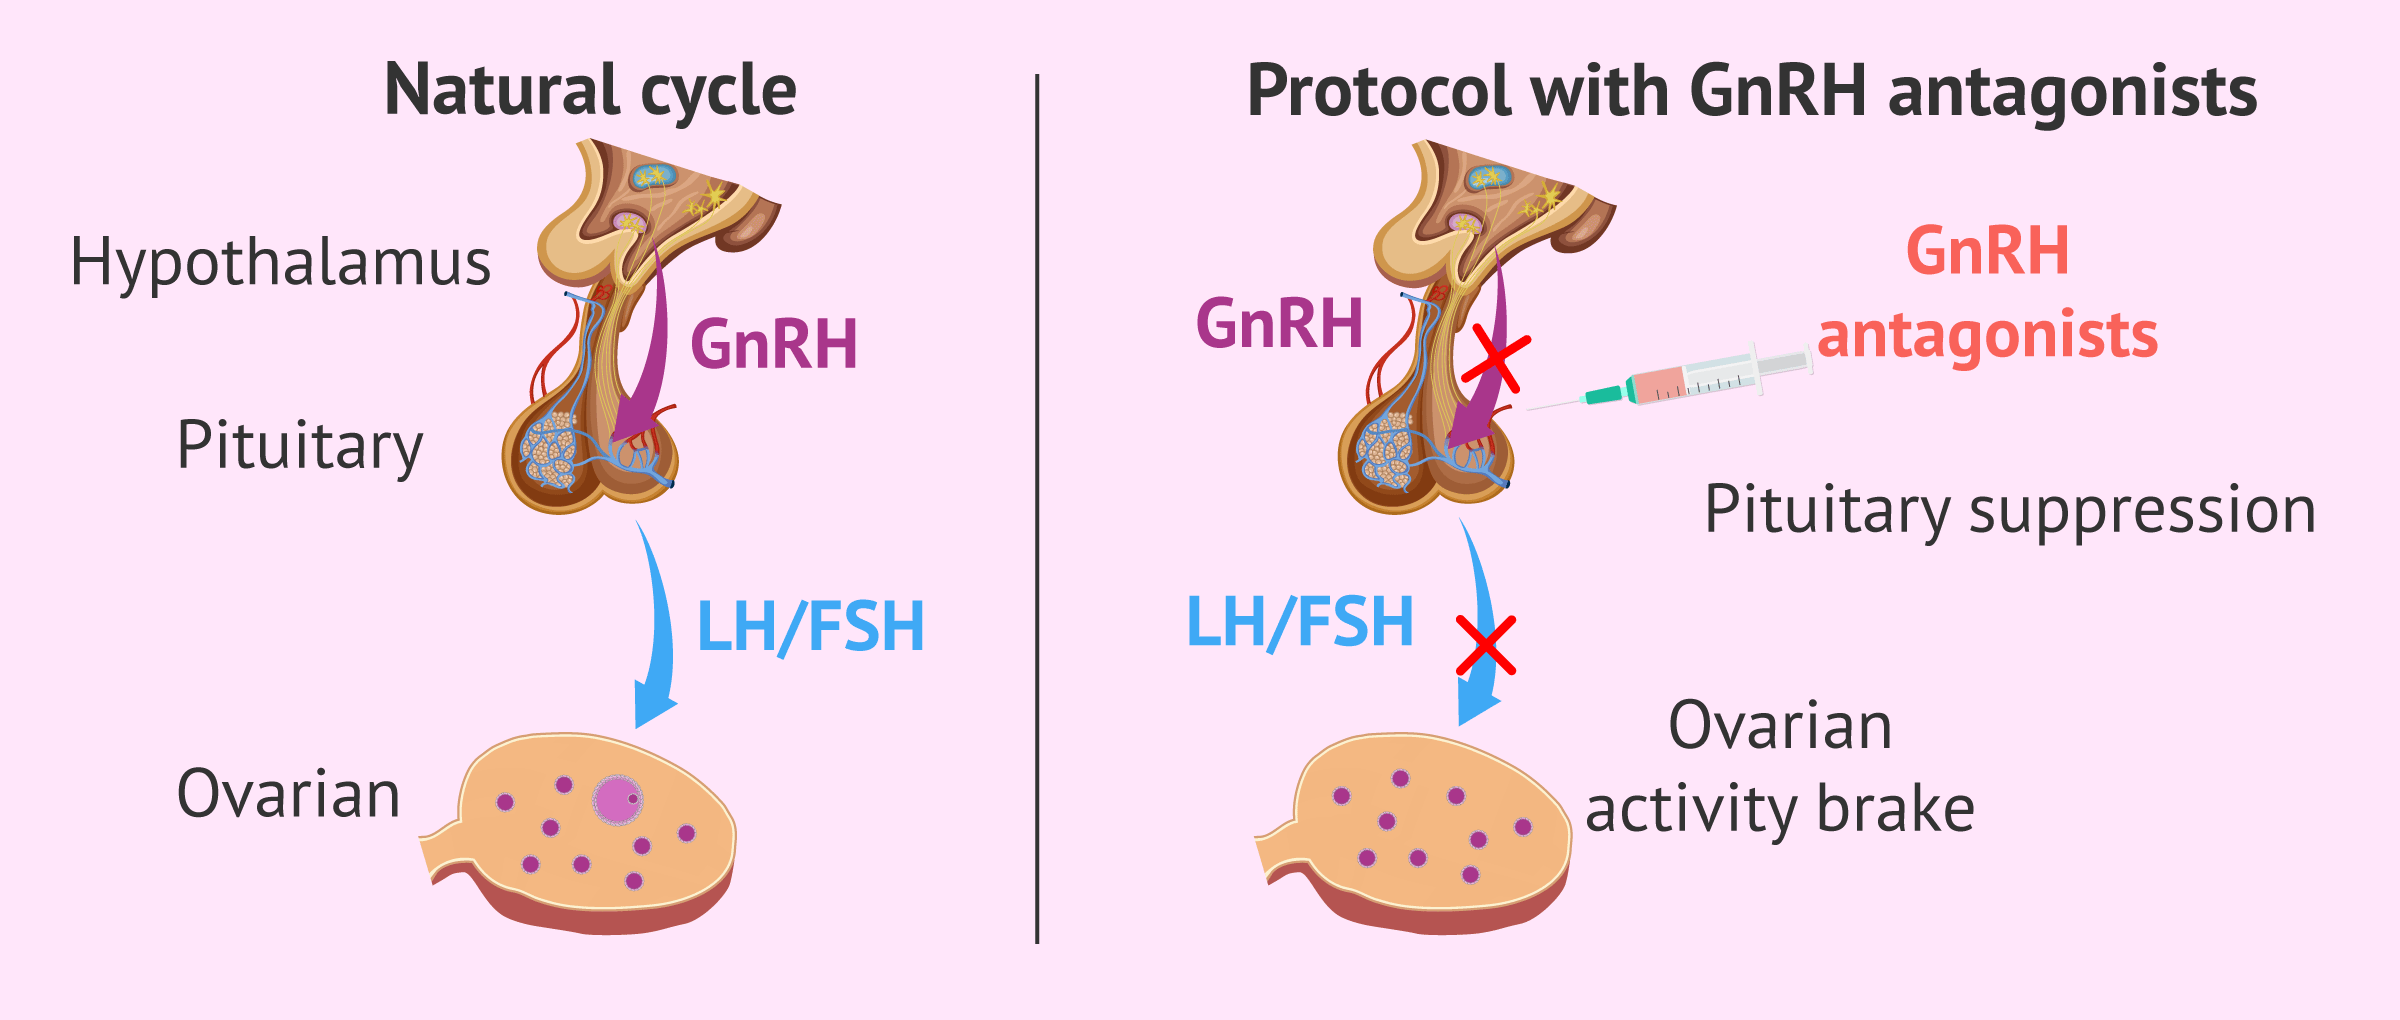 Mechanism of action of GnRH antagonists